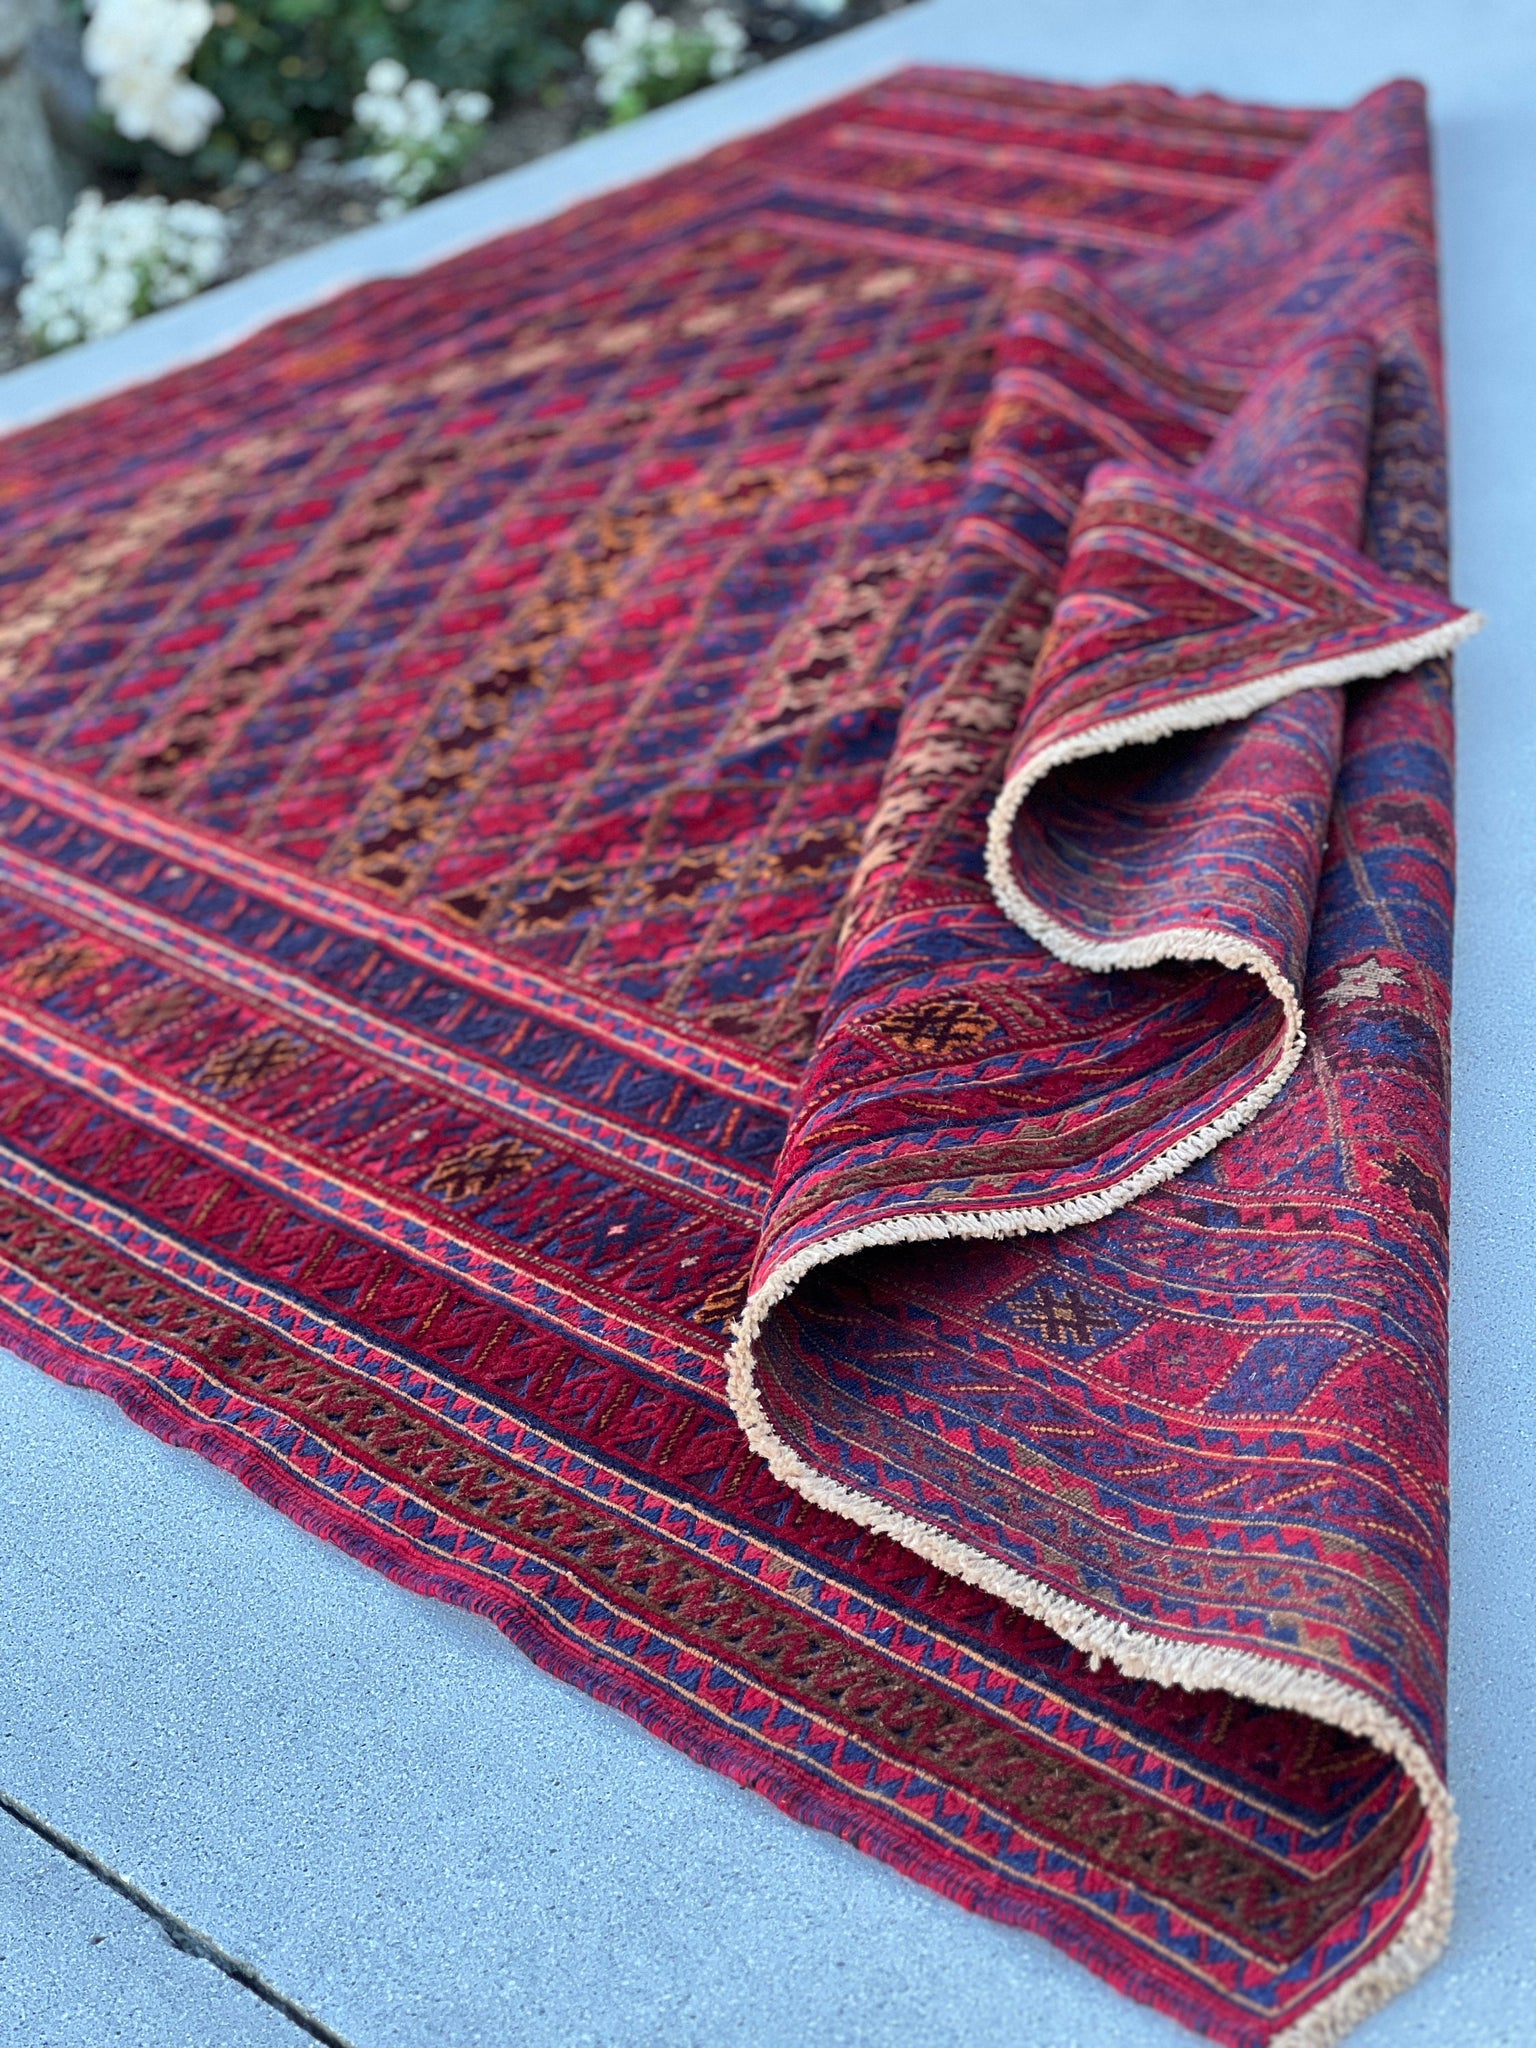 5x7 (150x215) Handmade Afghan Rug | Cherry Crimson Auburn Red Midnight Blue Caramel Brown Orange Tan Chocolate | Hand Knotted Turkish Wool